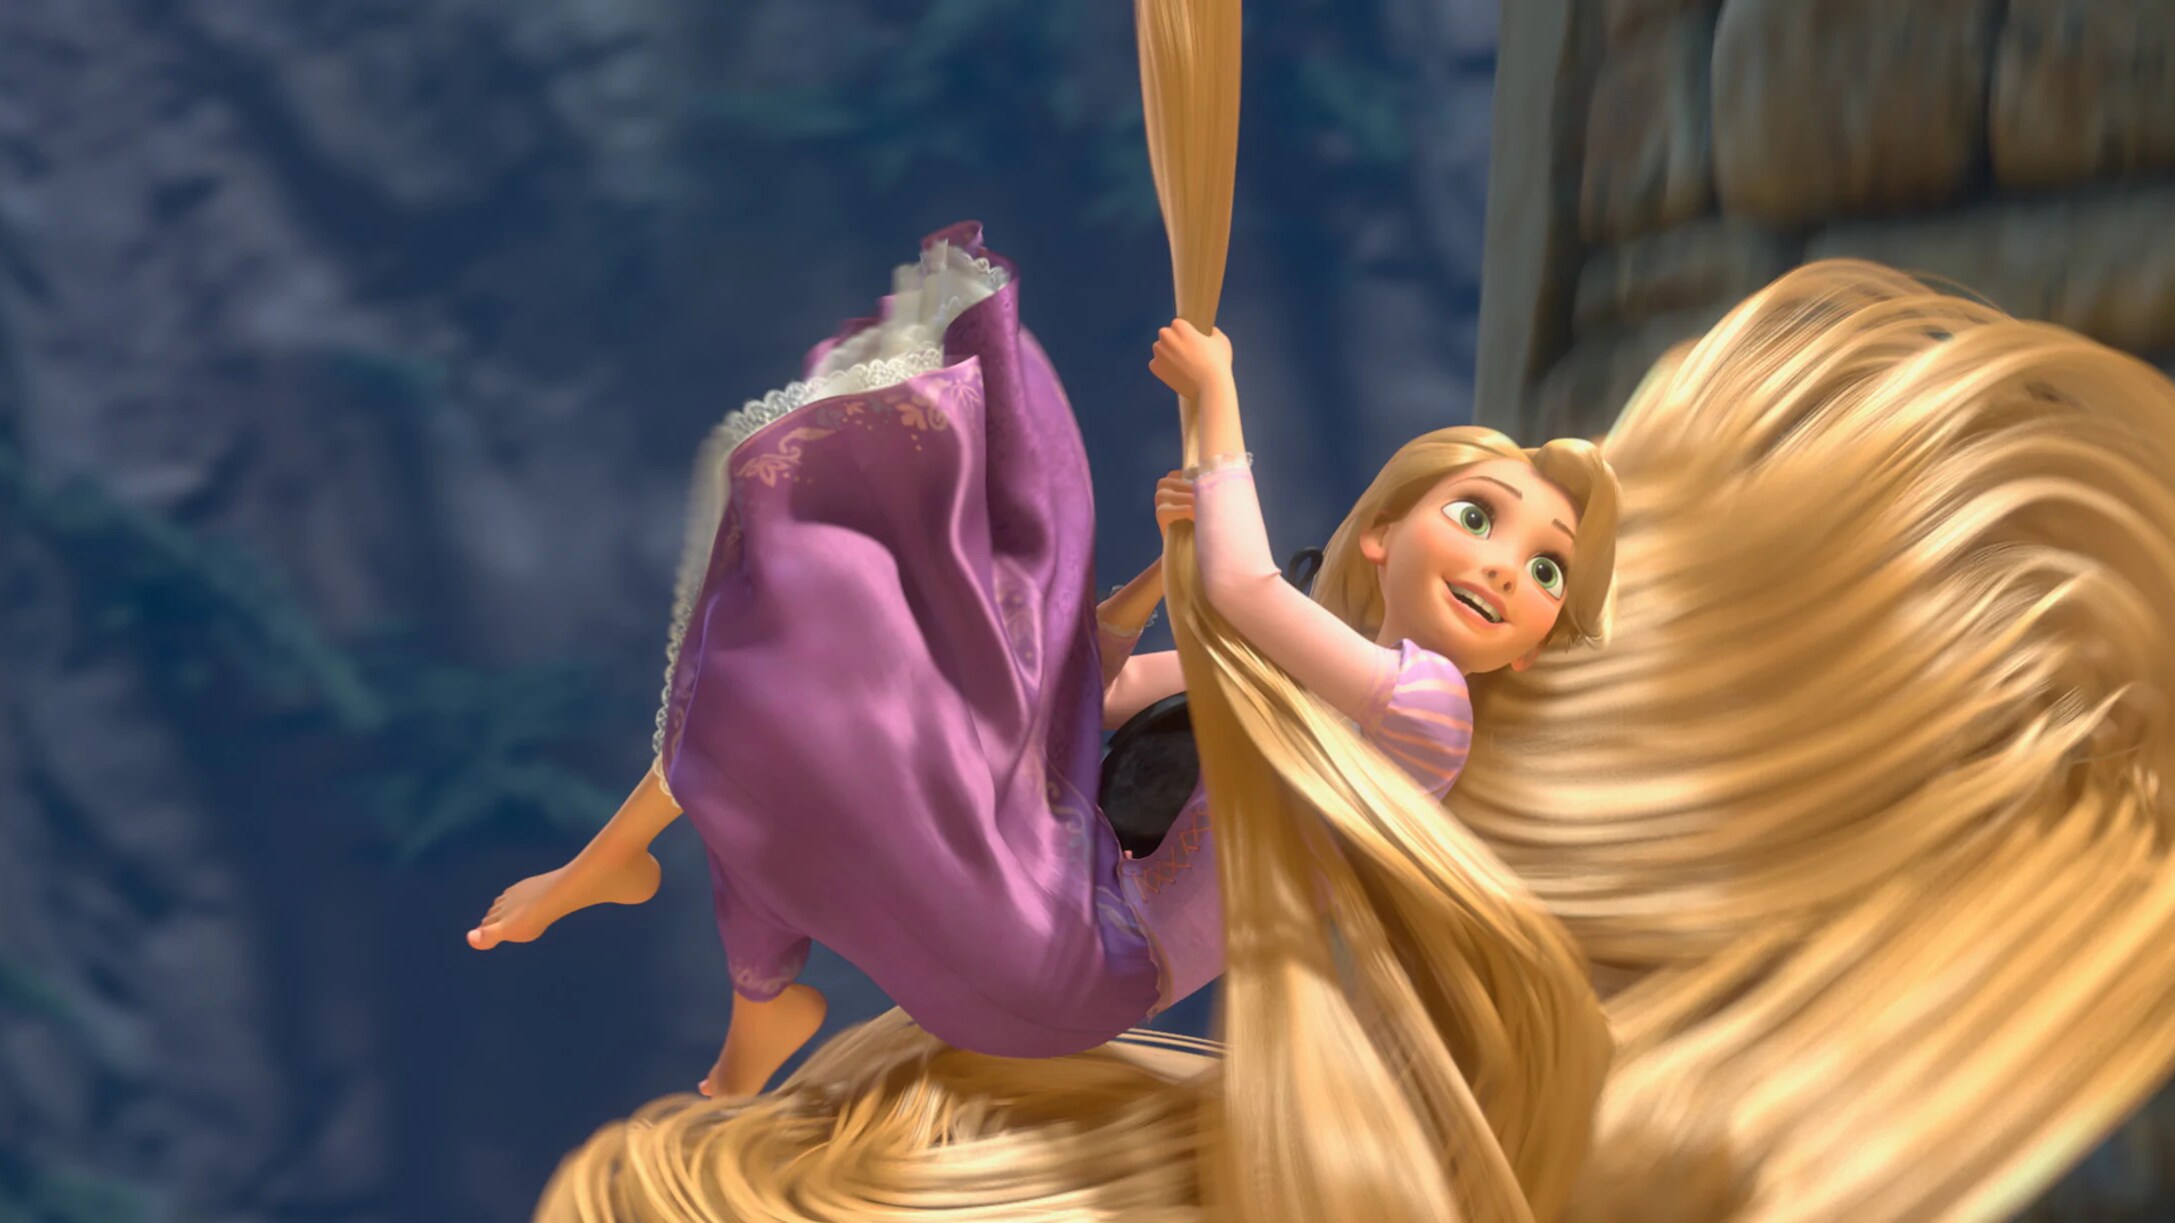 Rapunzel swinging into a new adventure.